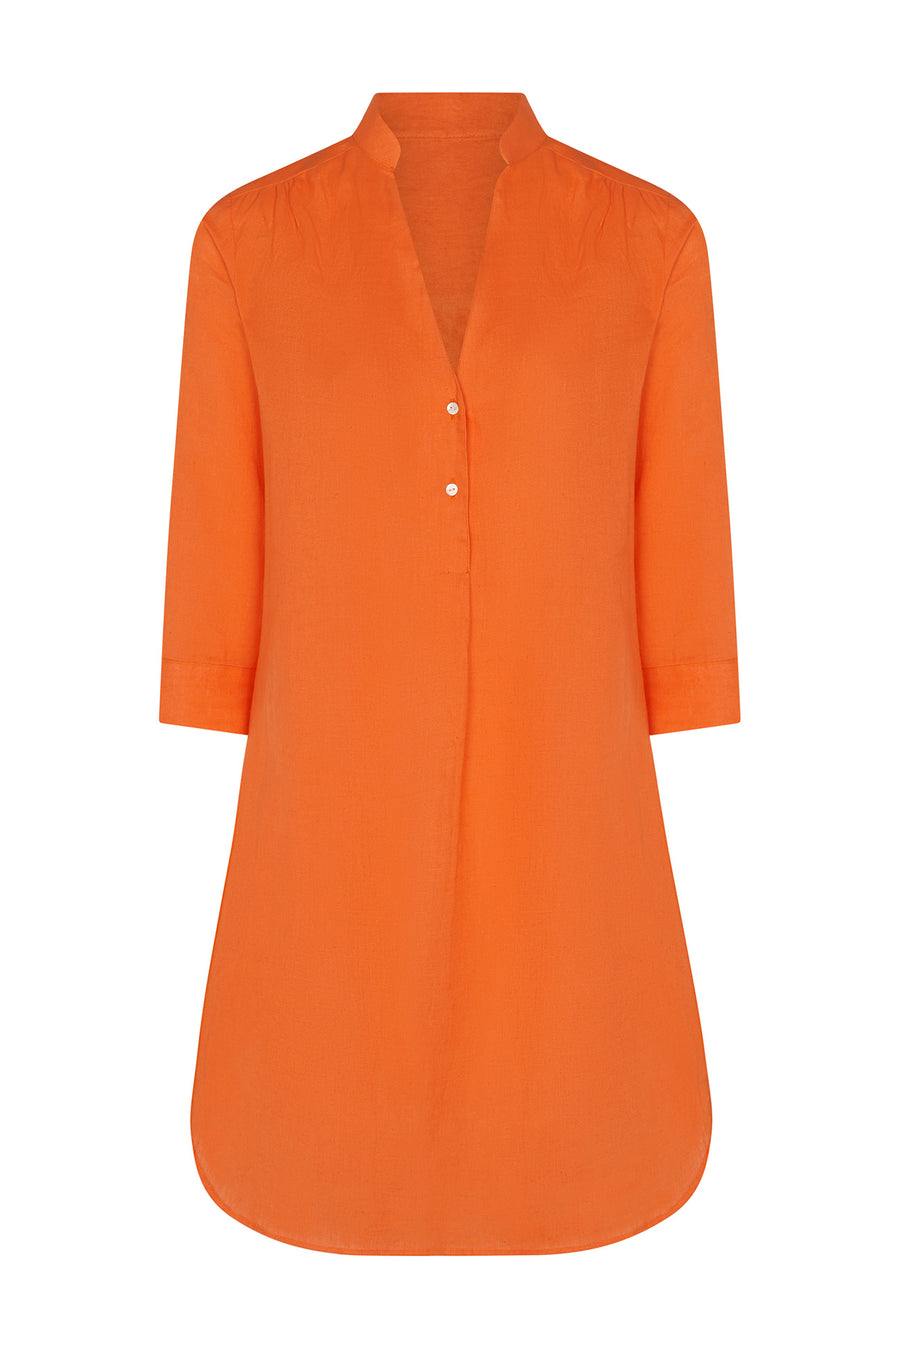 Tropical holiday style women's Decima dress in orange pure linen by Lotty B Mustique resortwear